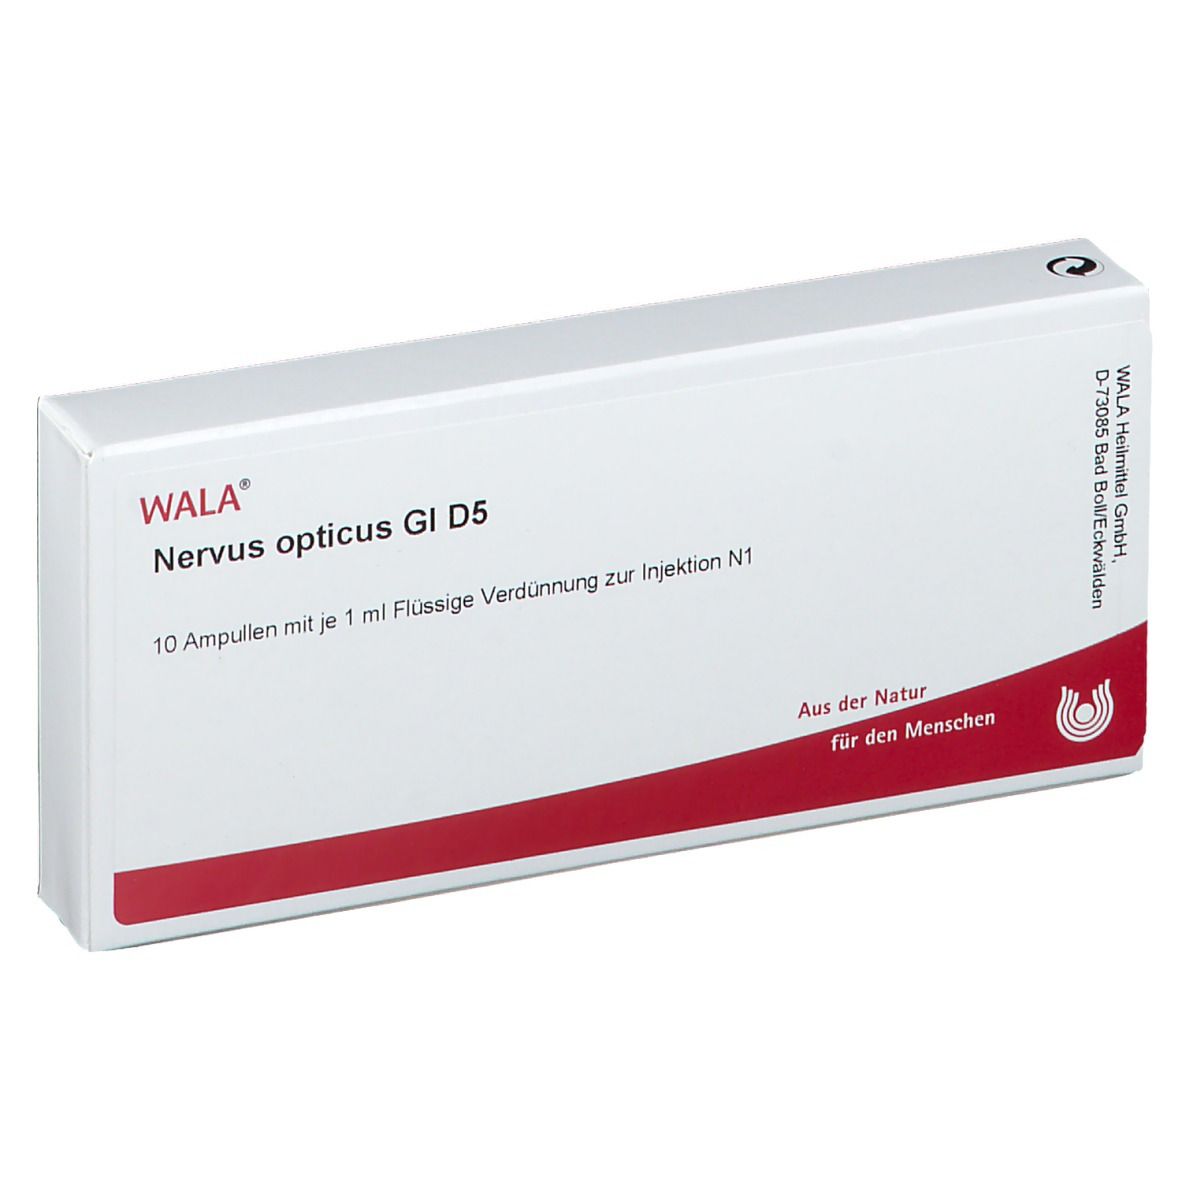 WALA® Nervus opticus Gl D 5